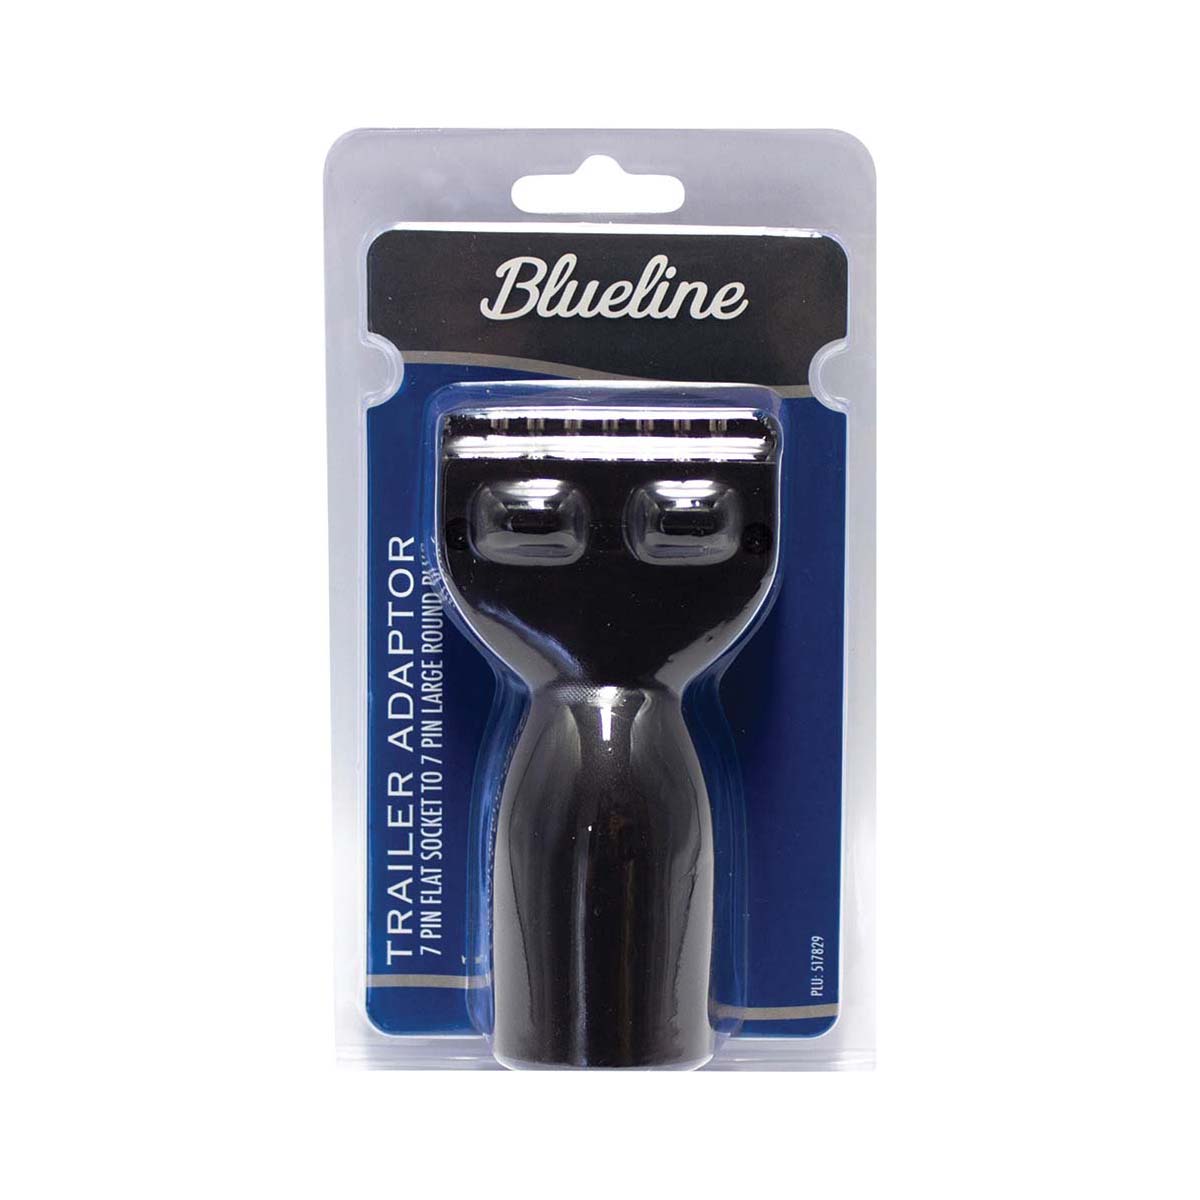 Blueline 7 Pin Trailer Adaptor - Flat Socket to Large, Round Plug